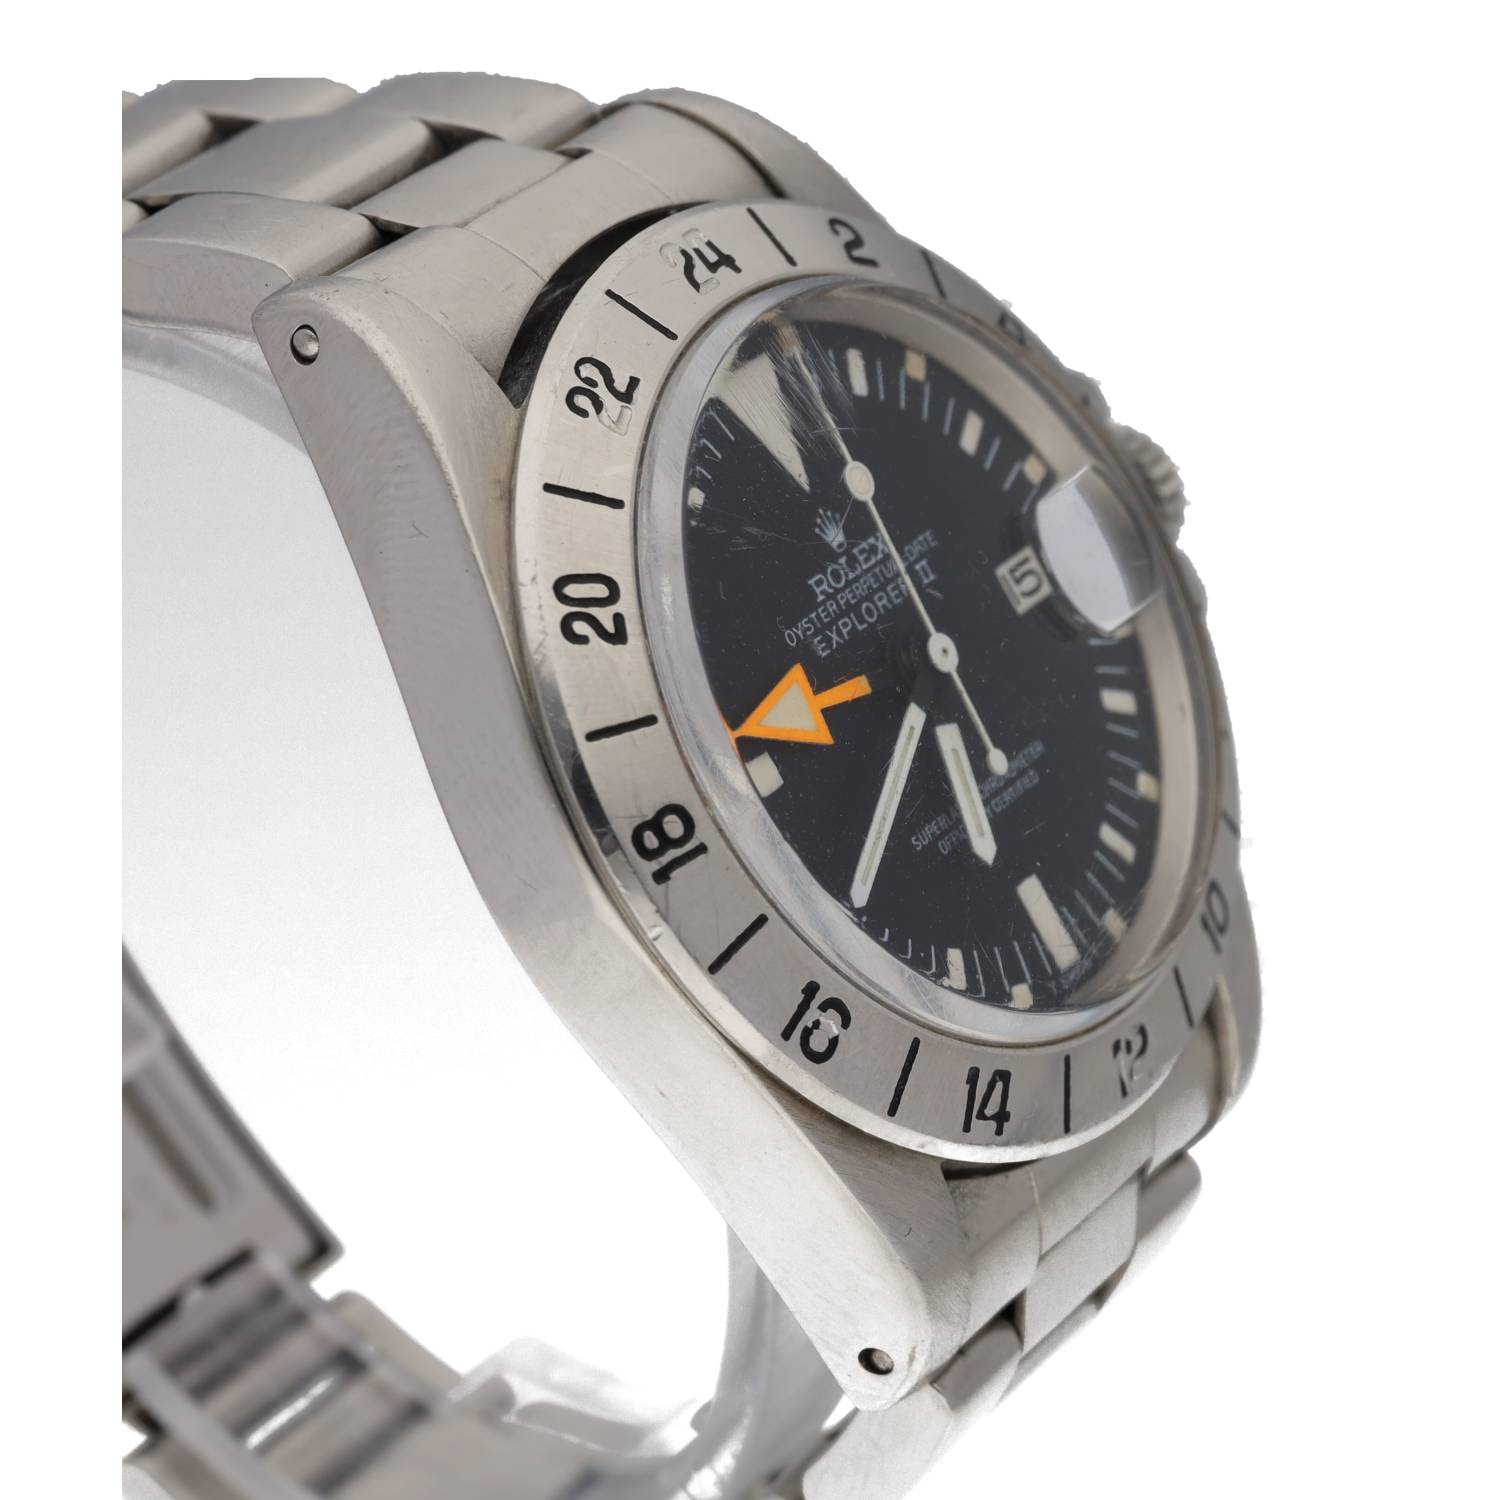 Rolex Oyster Perpetual Date Explorer II 'Steve McQueen' stainless steel gentleman's wristwatch, - Image 4 of 7